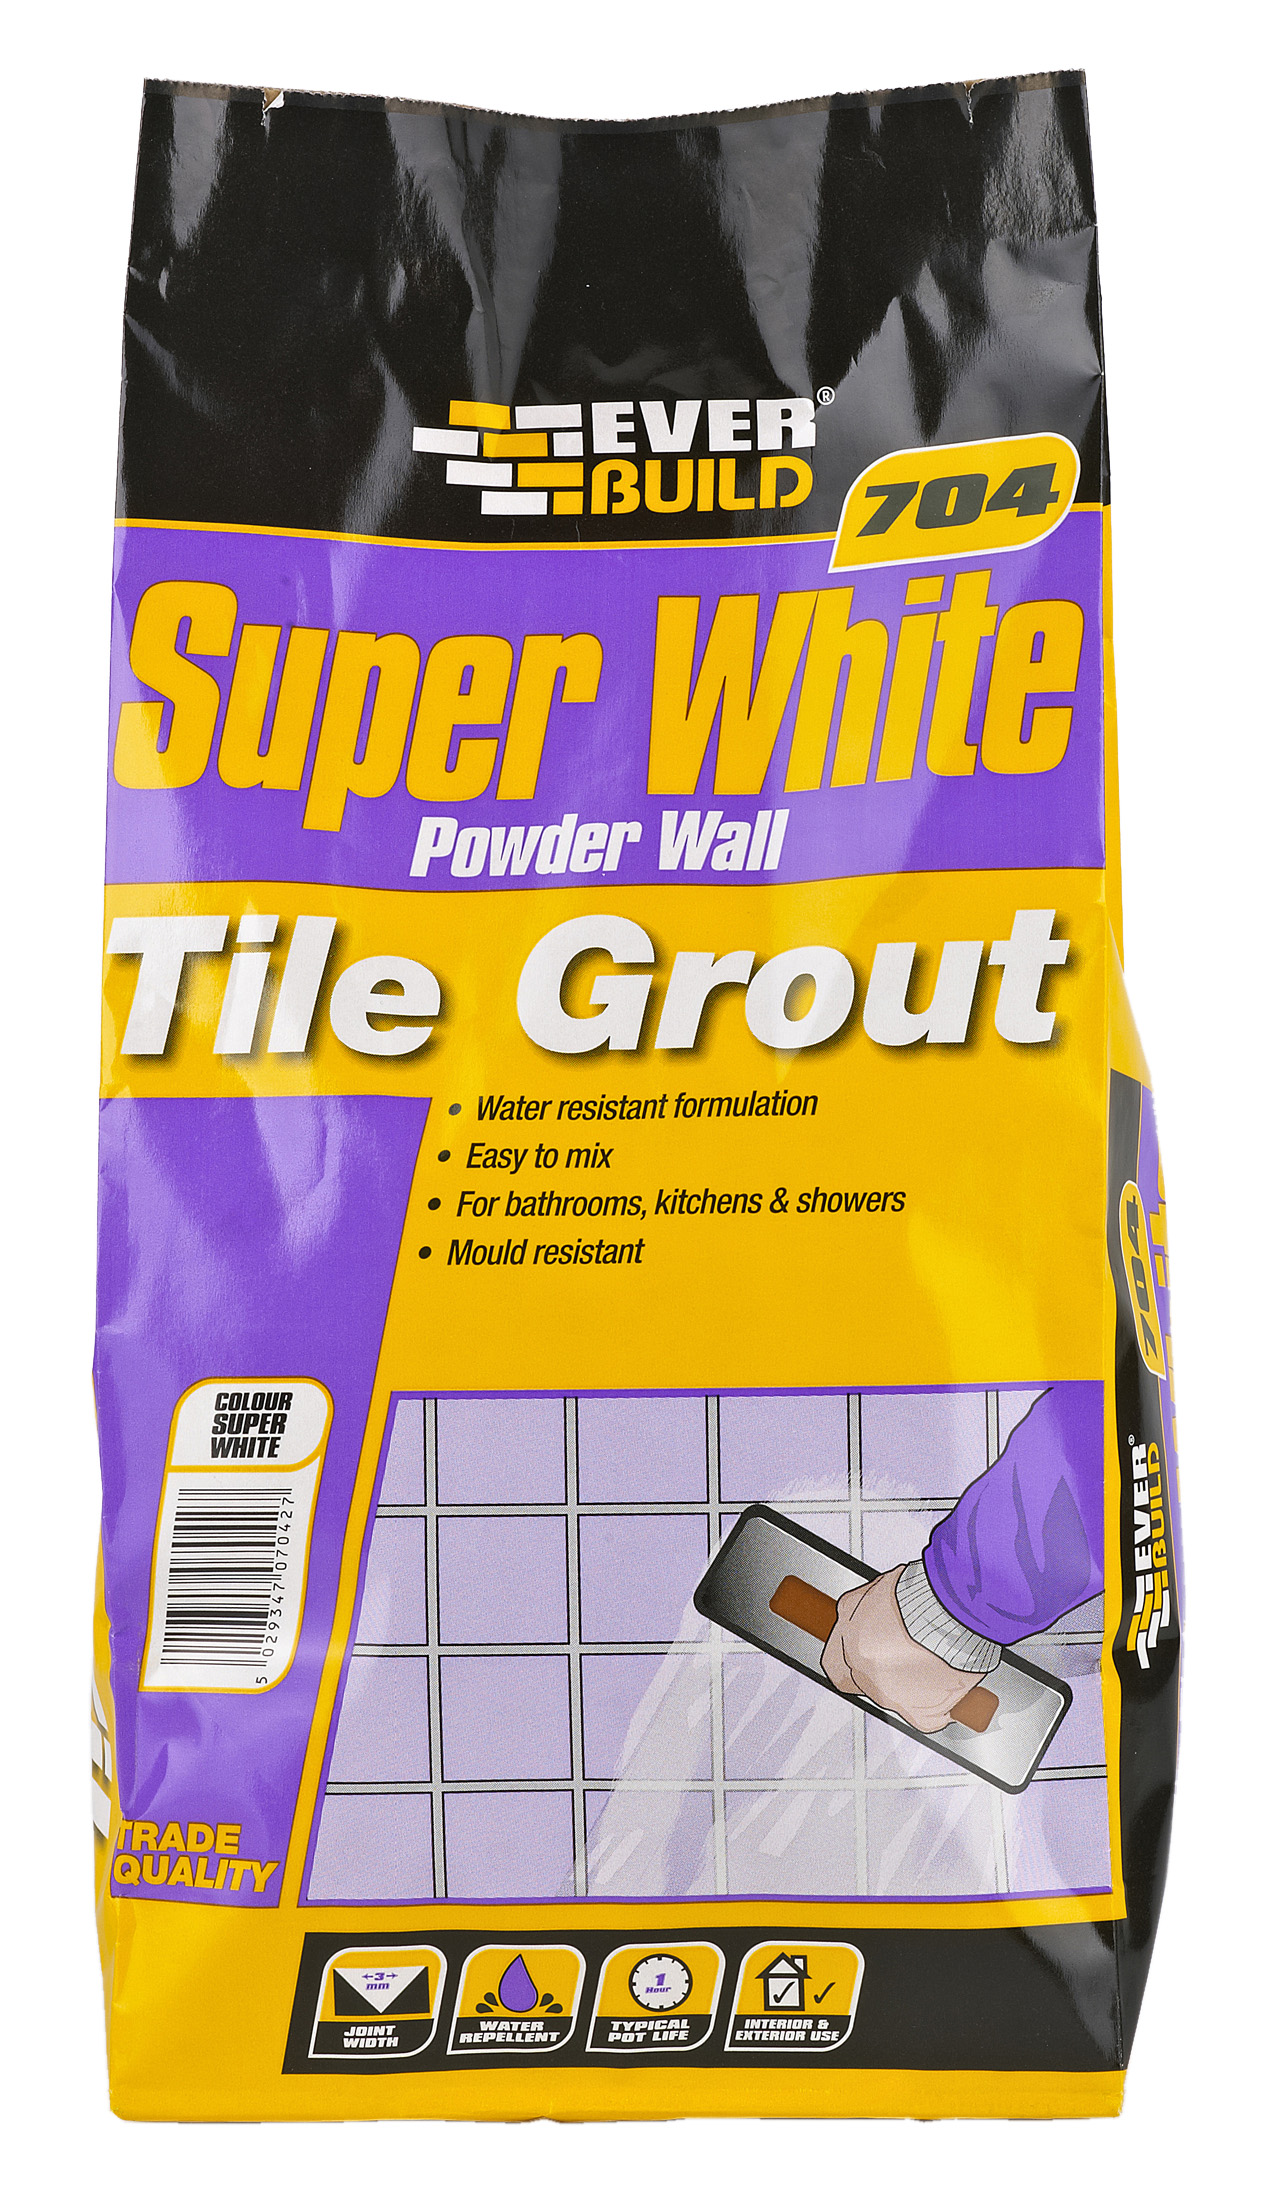 White 704 Powder Wall Tile Grout